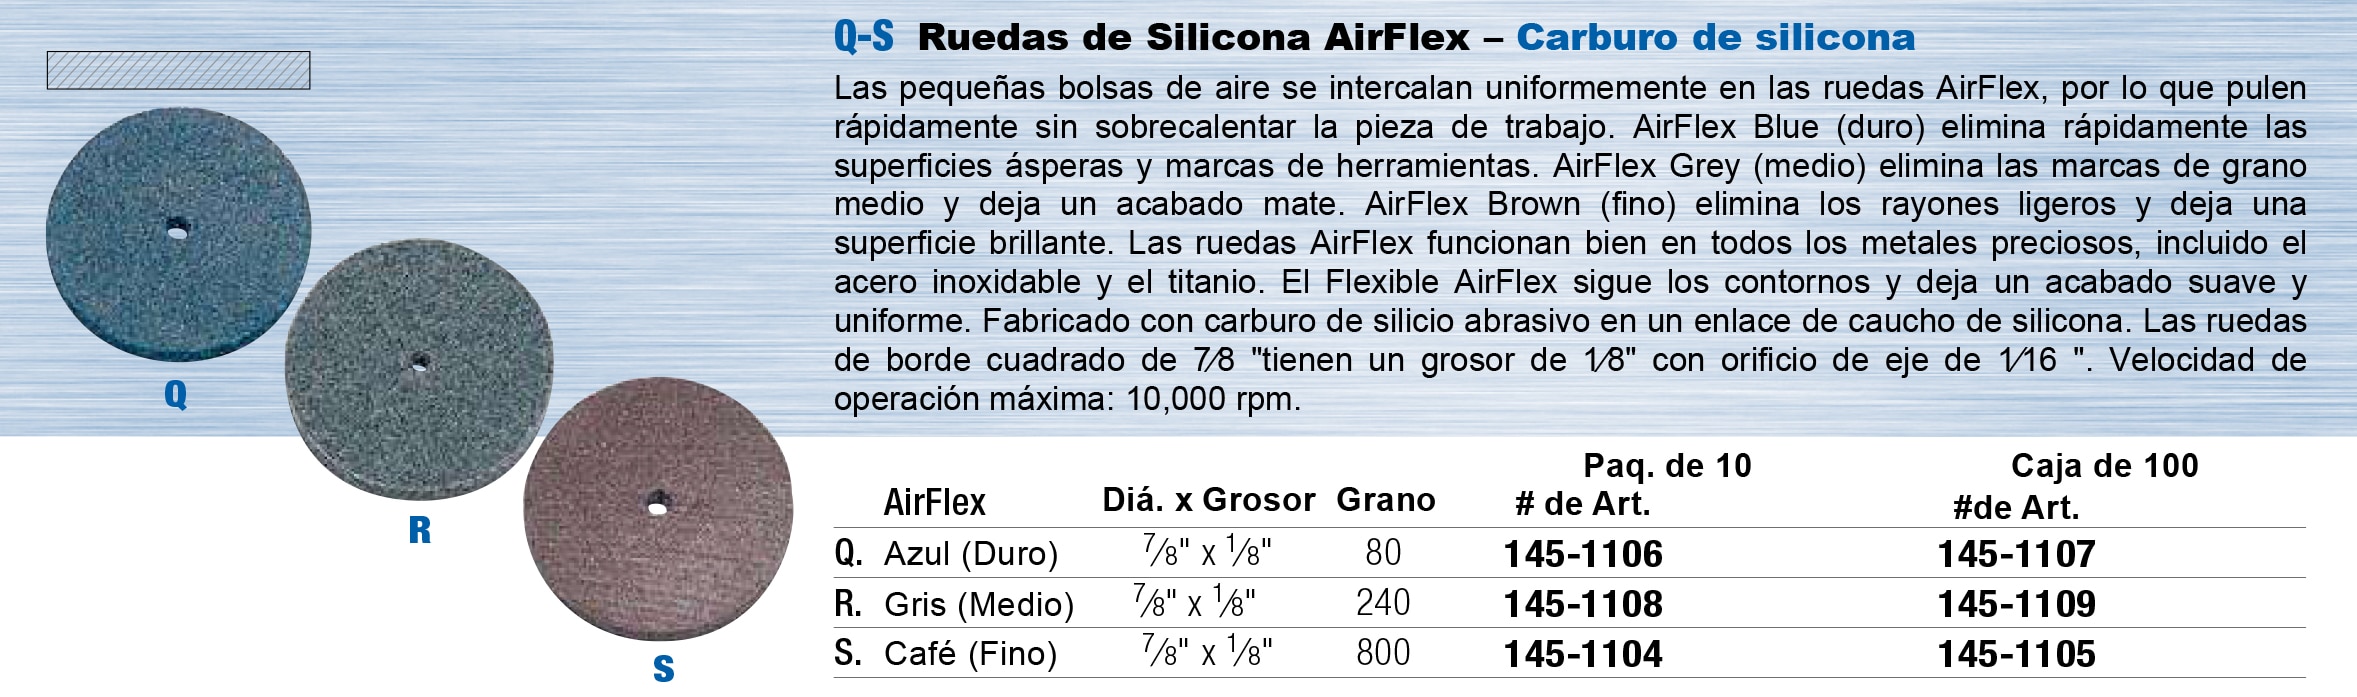 Ruedas AirFlex (ficha)